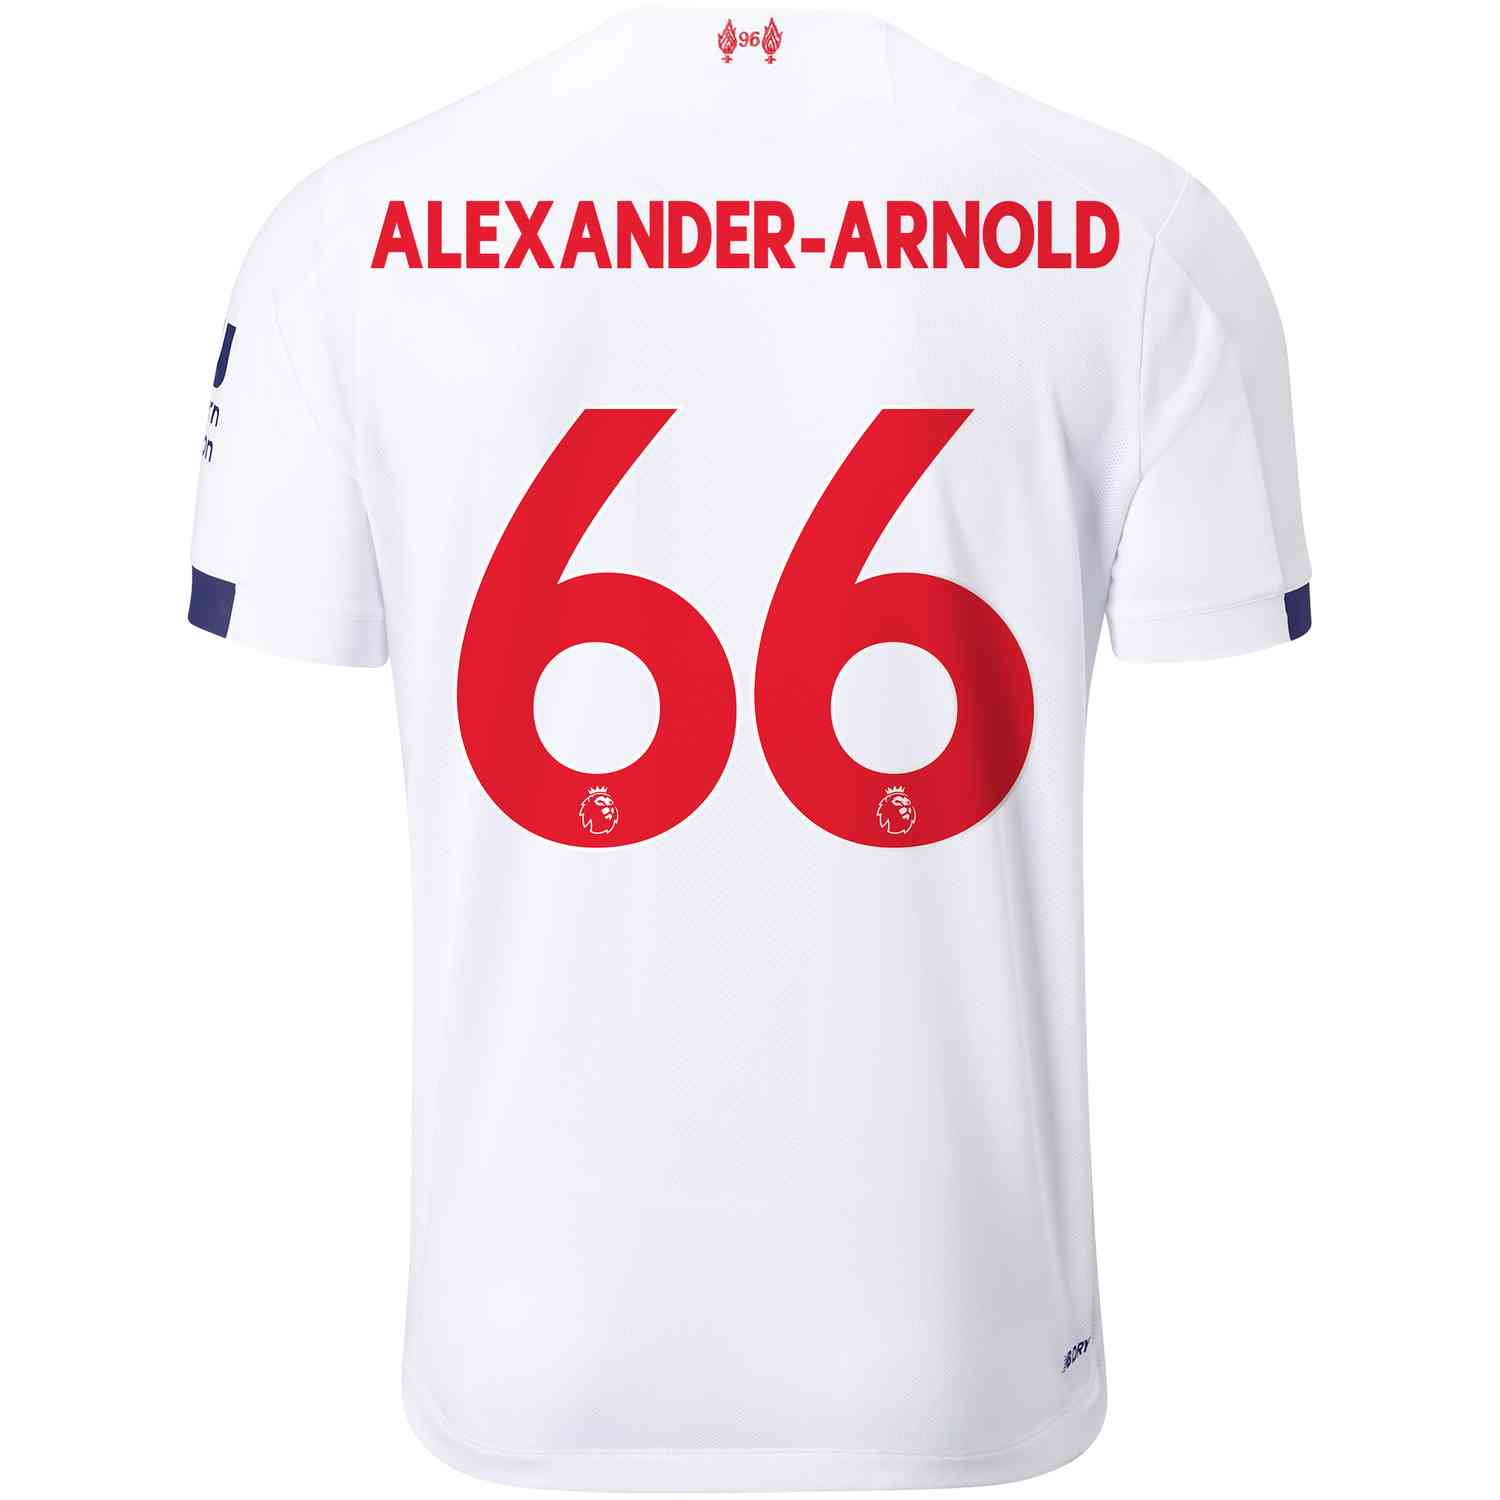 alexander arnold jersey